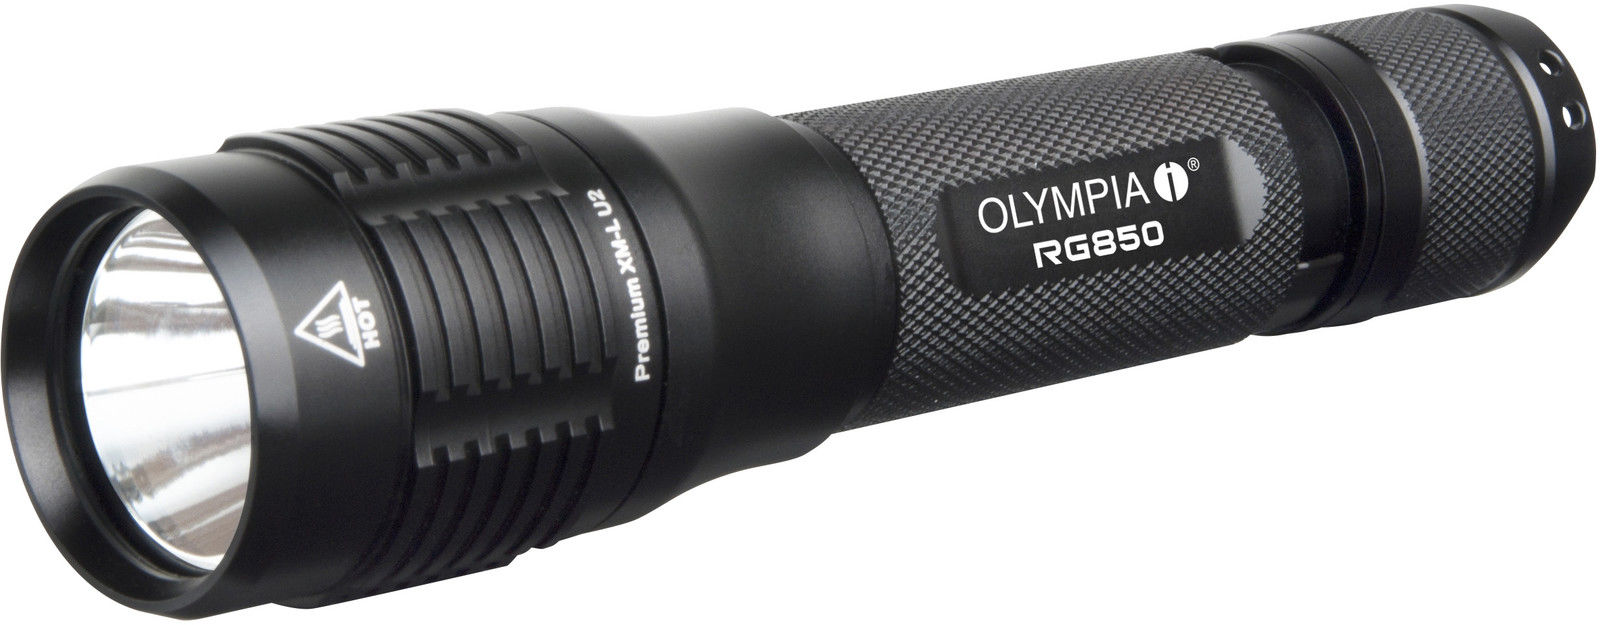 Olympia RG850 High-Performance Rugged Flashlight, Black RG850